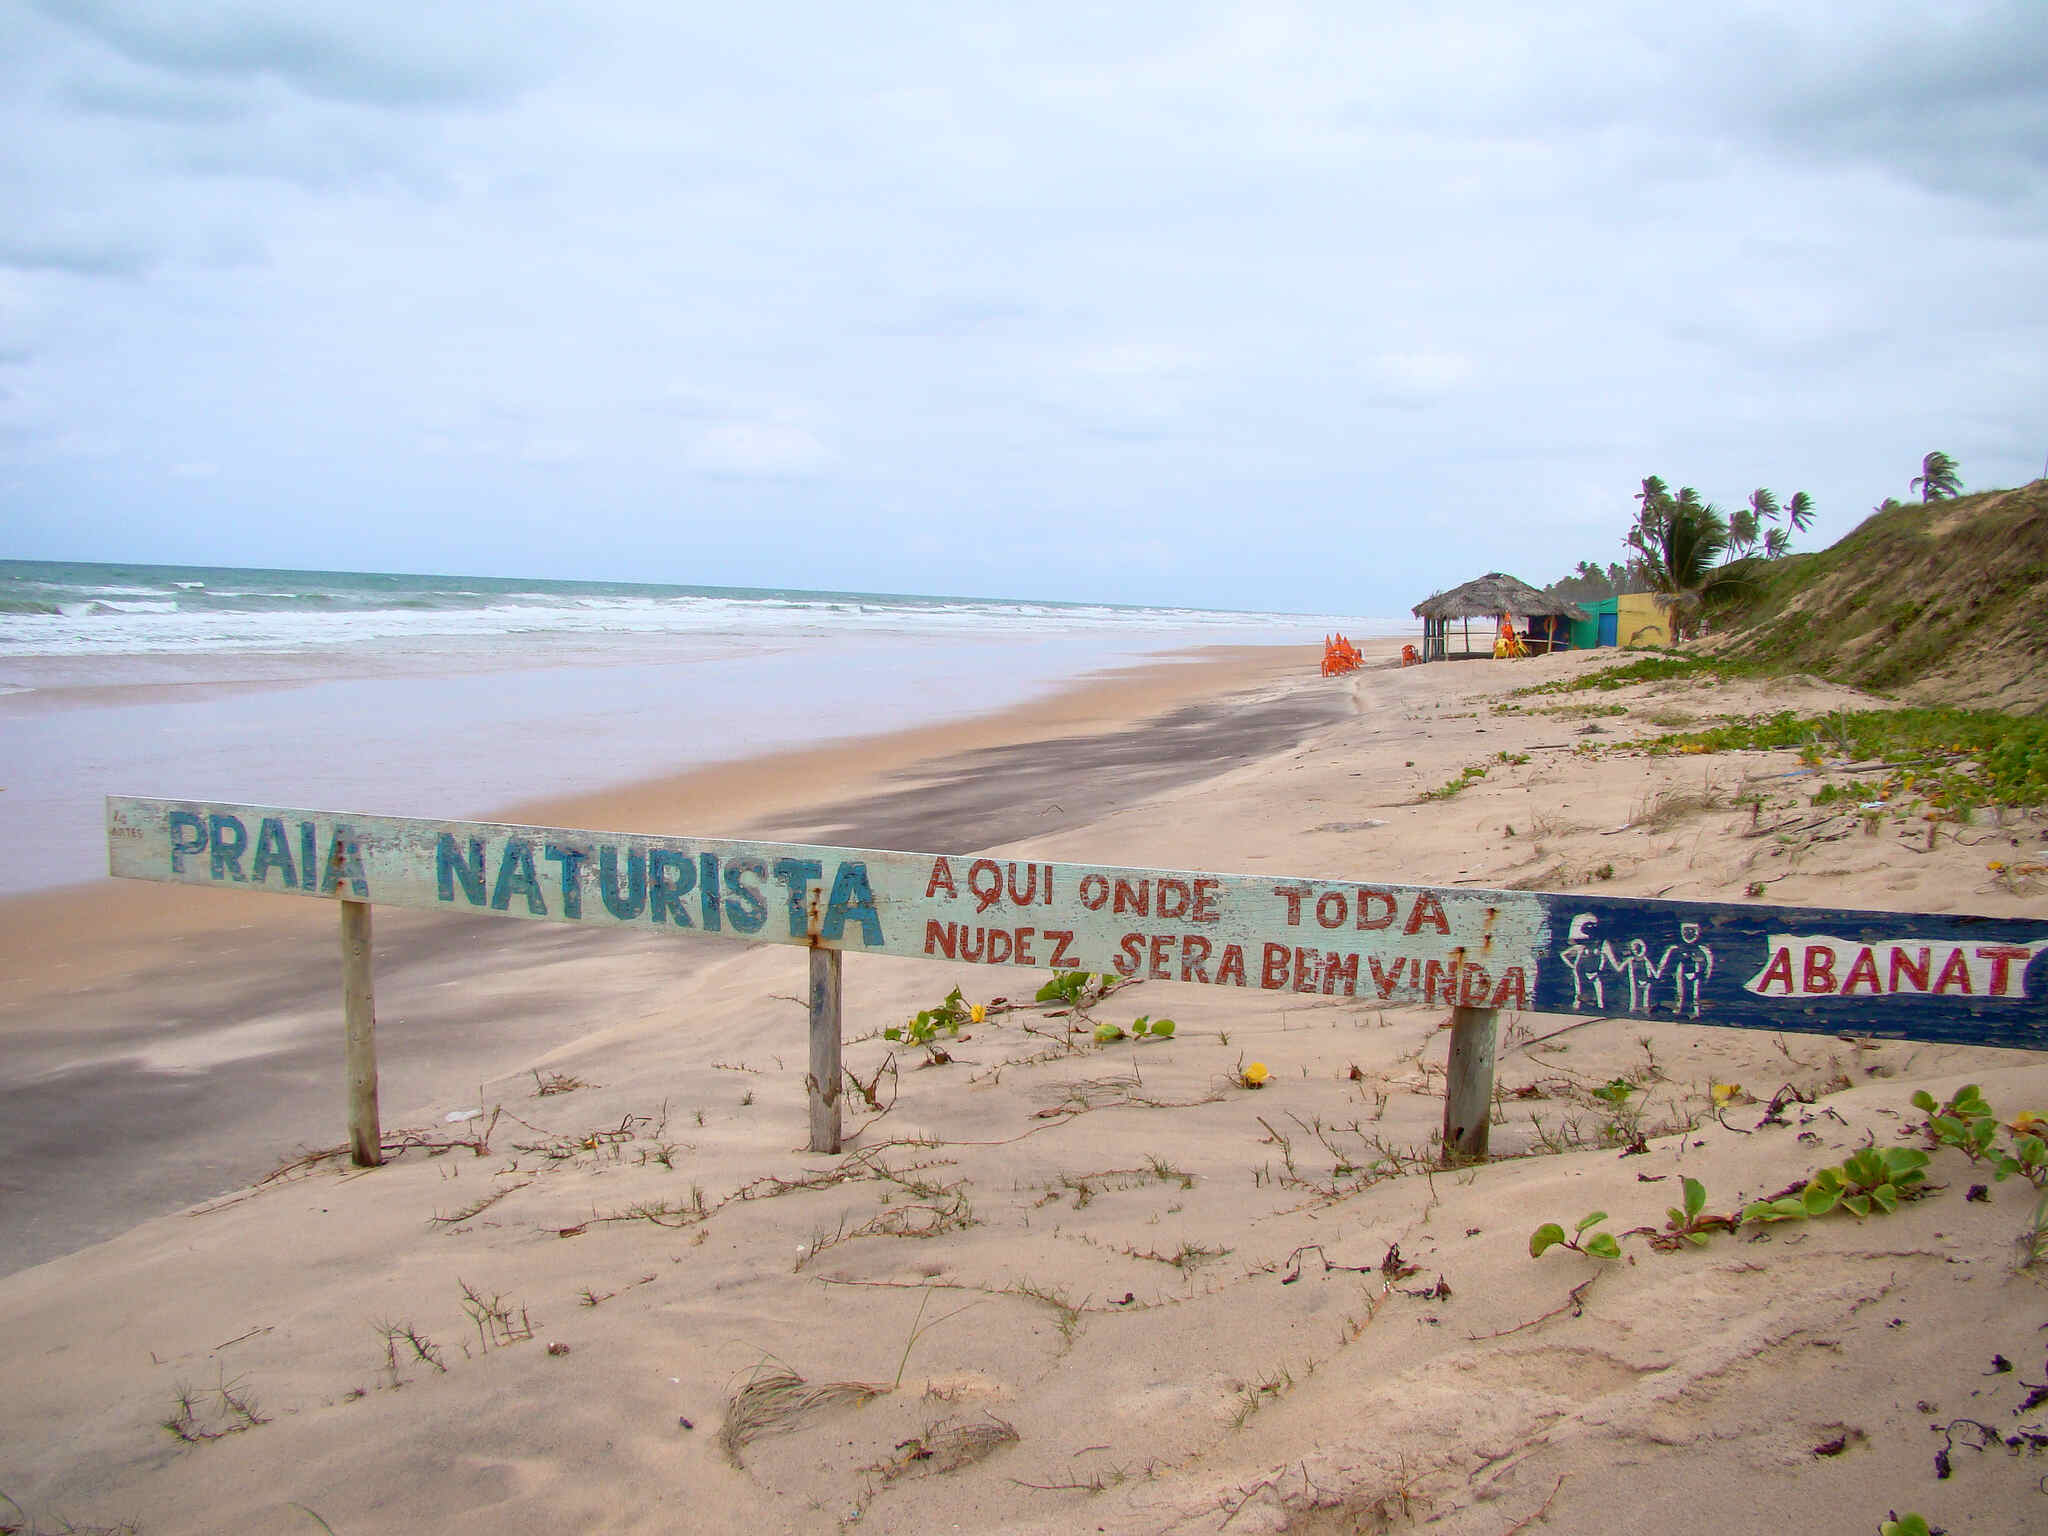 Praia de Nudismo no Brasil